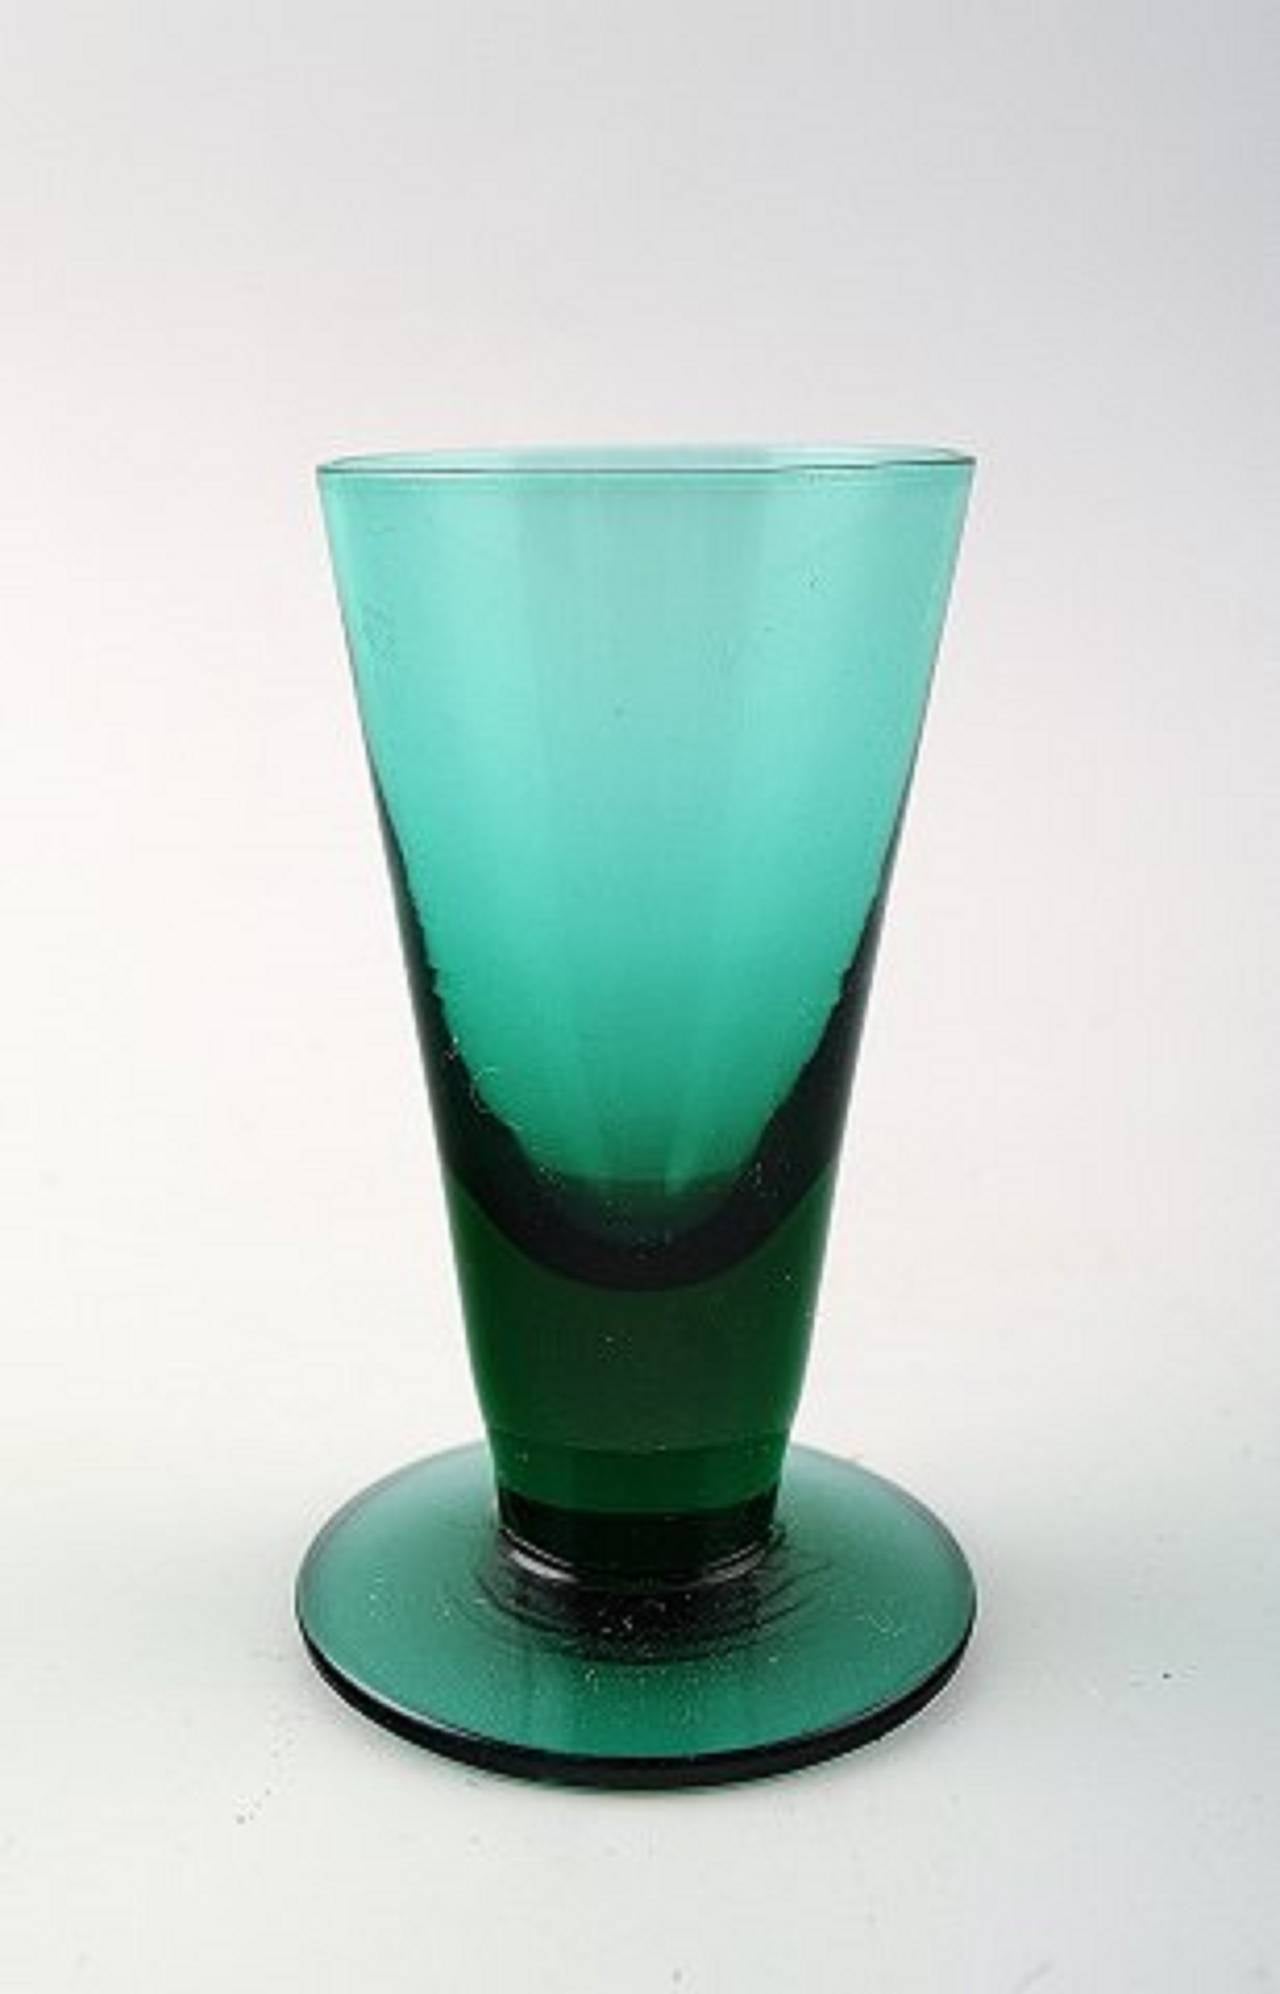 8 Josef Frank green vodka glass, Reijmyre, 1960s.
In perfect condition.
Measures 8.5 cm.